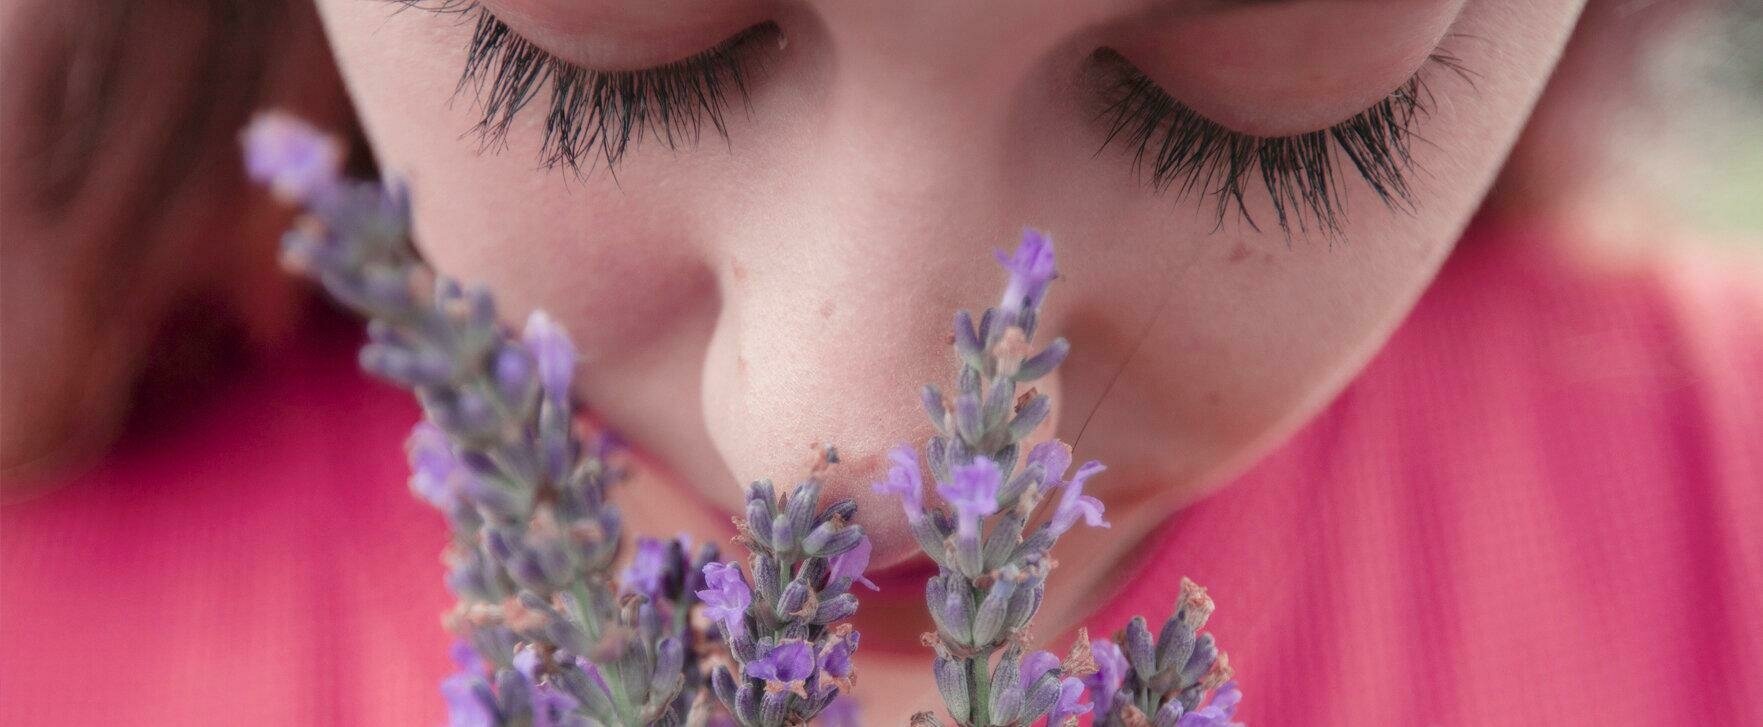 The Female Sense of Smell